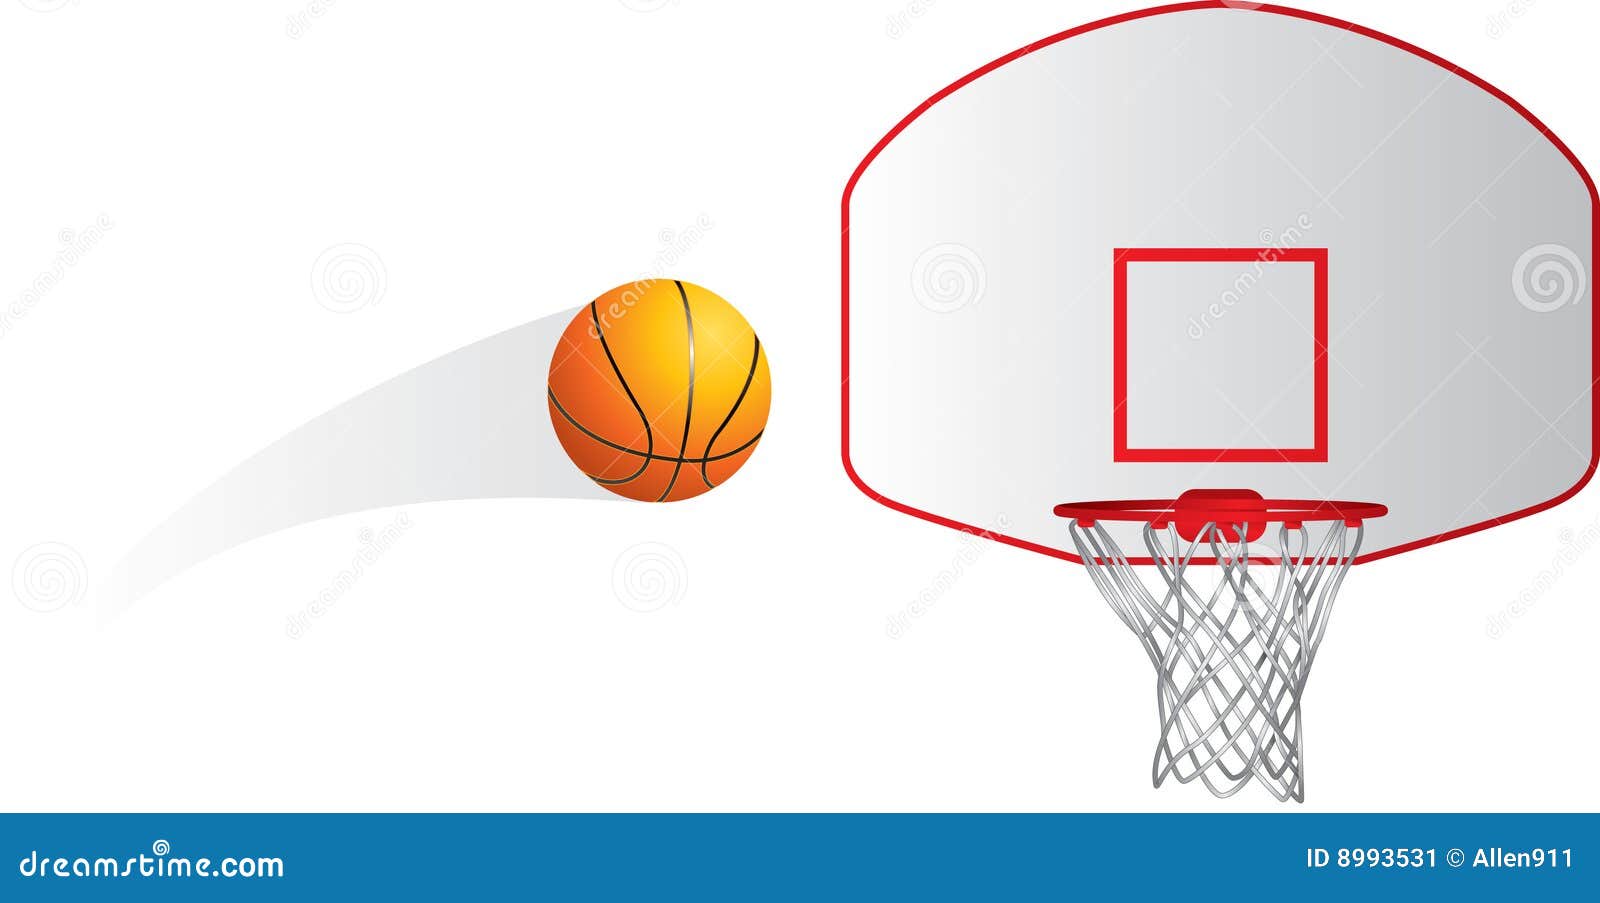  basketball and hoop